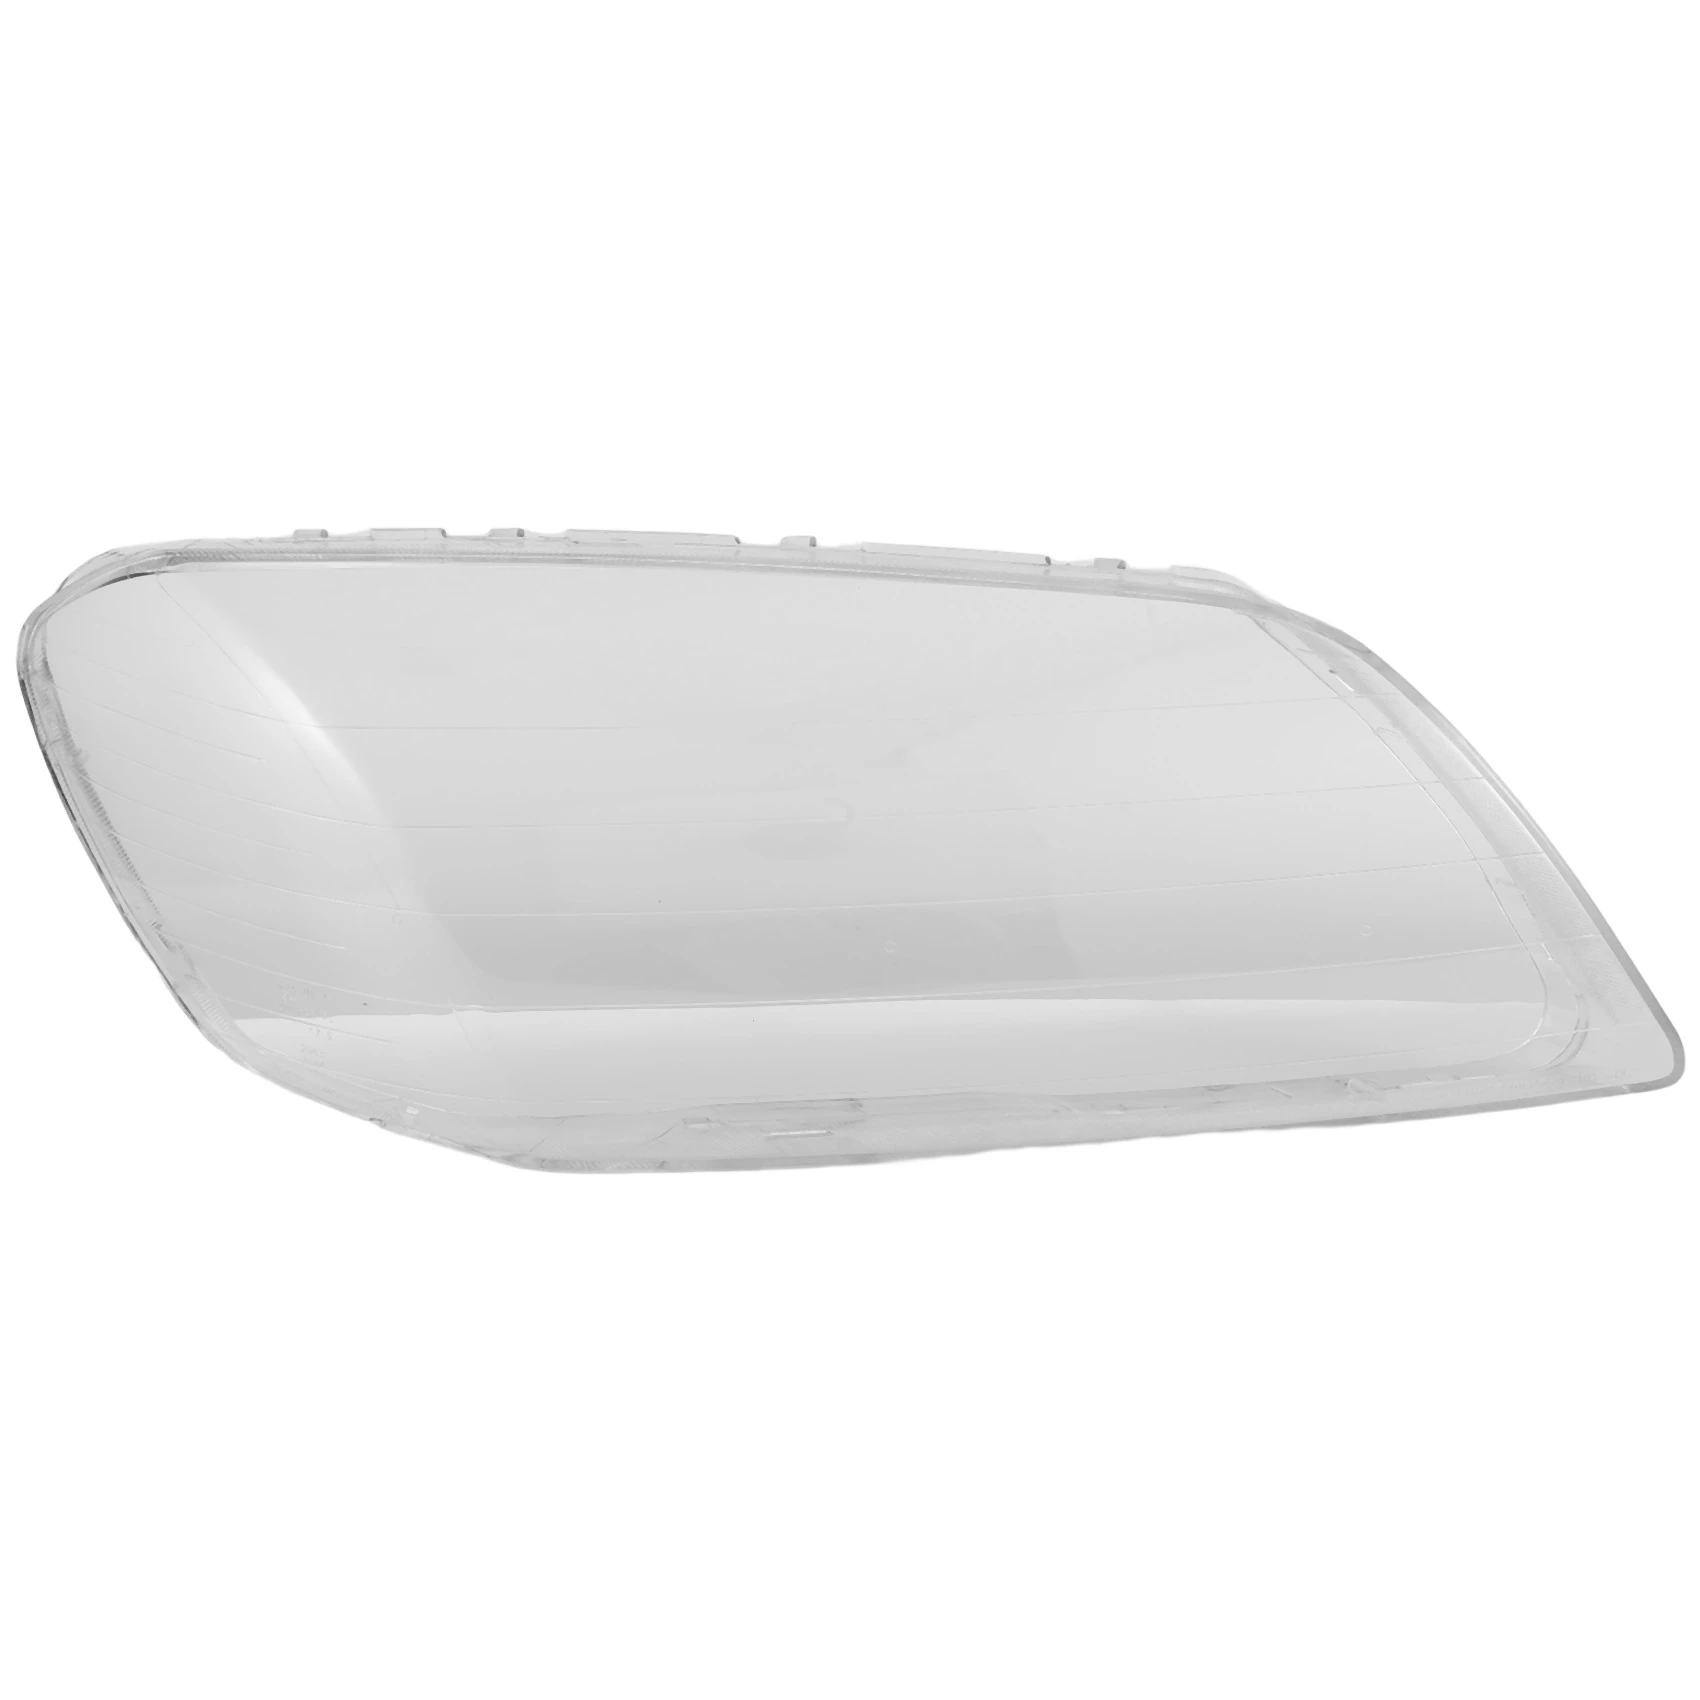 

Right Side Car Headlight Lens Cover Head Light Lamp Shade Shell Gl Cover for Chevrolet Crptivr 2008-2010